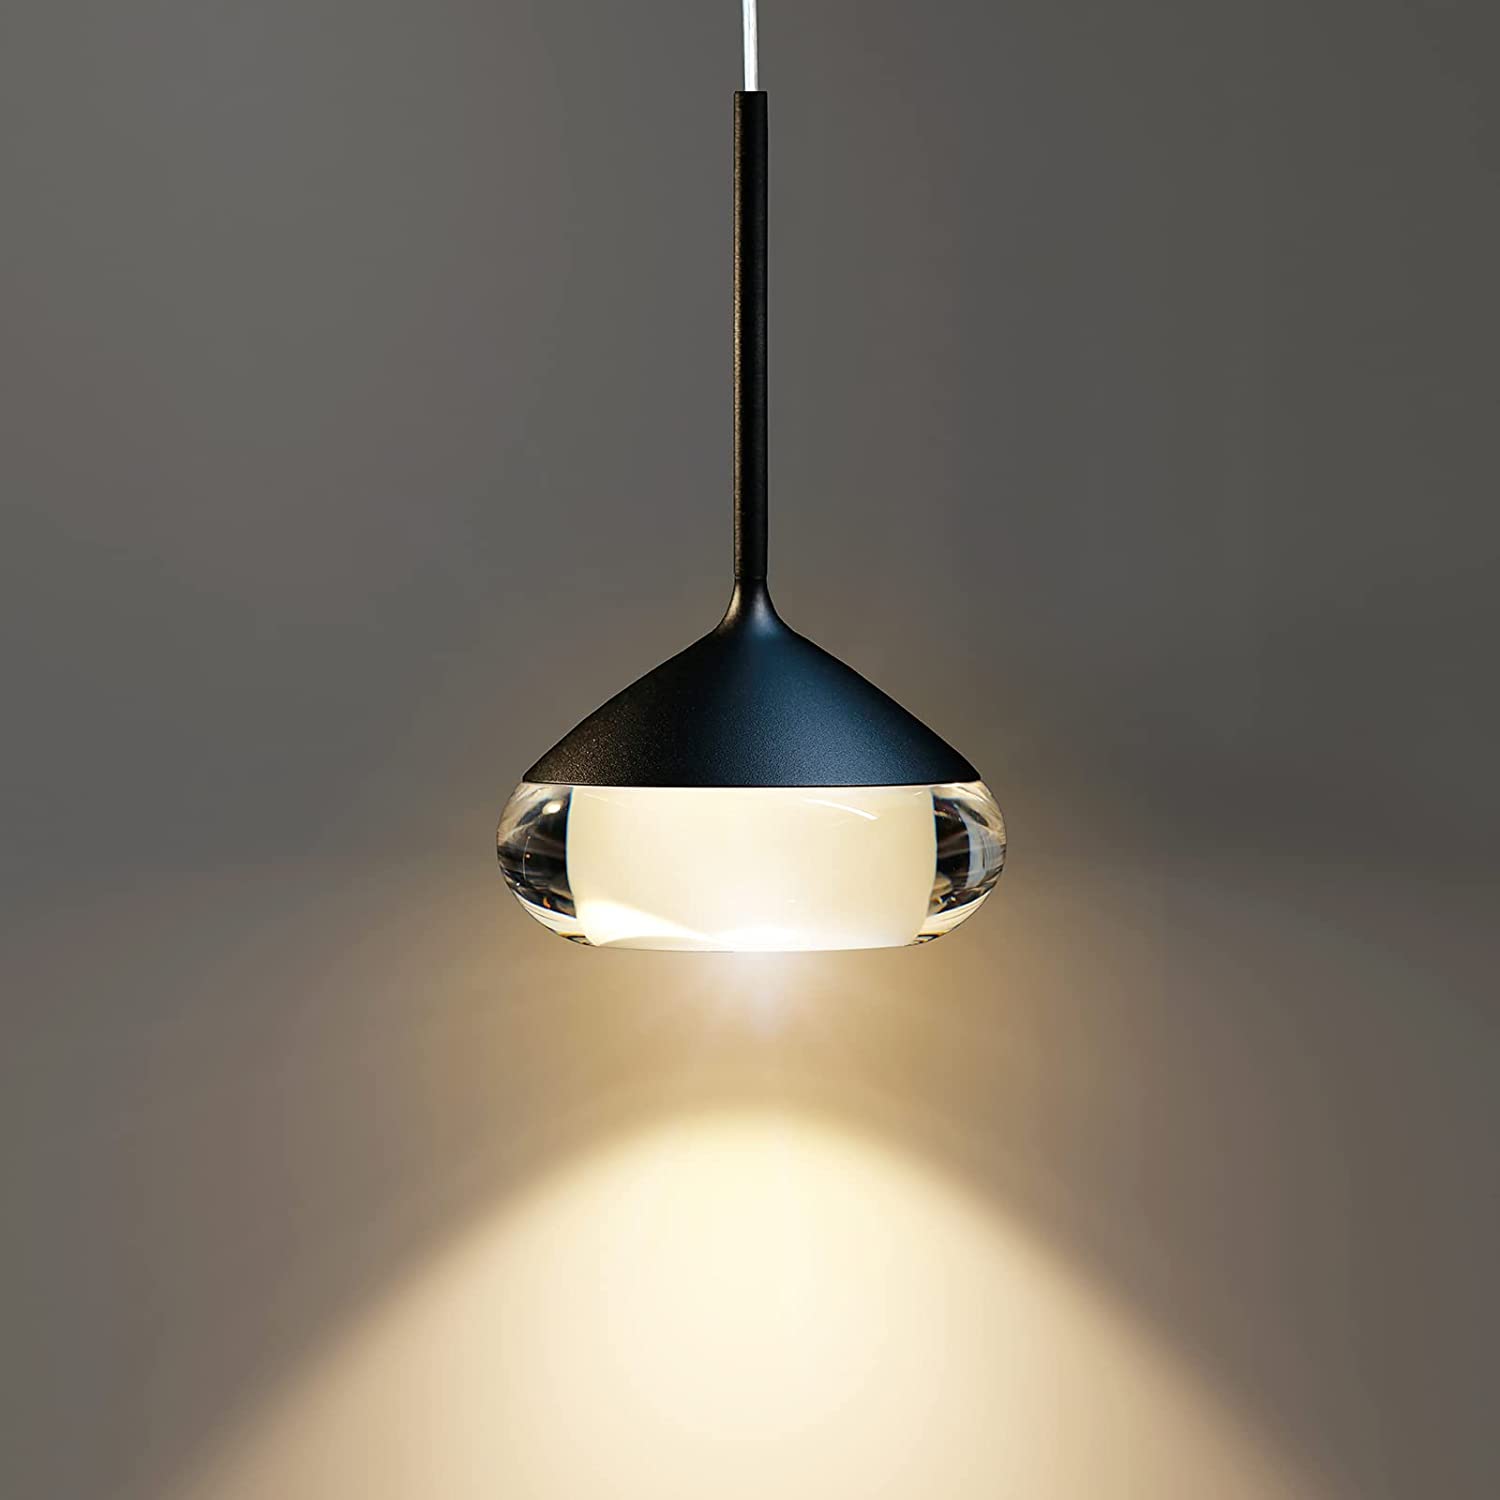 Modern pendant light fixture LED hanging lamp